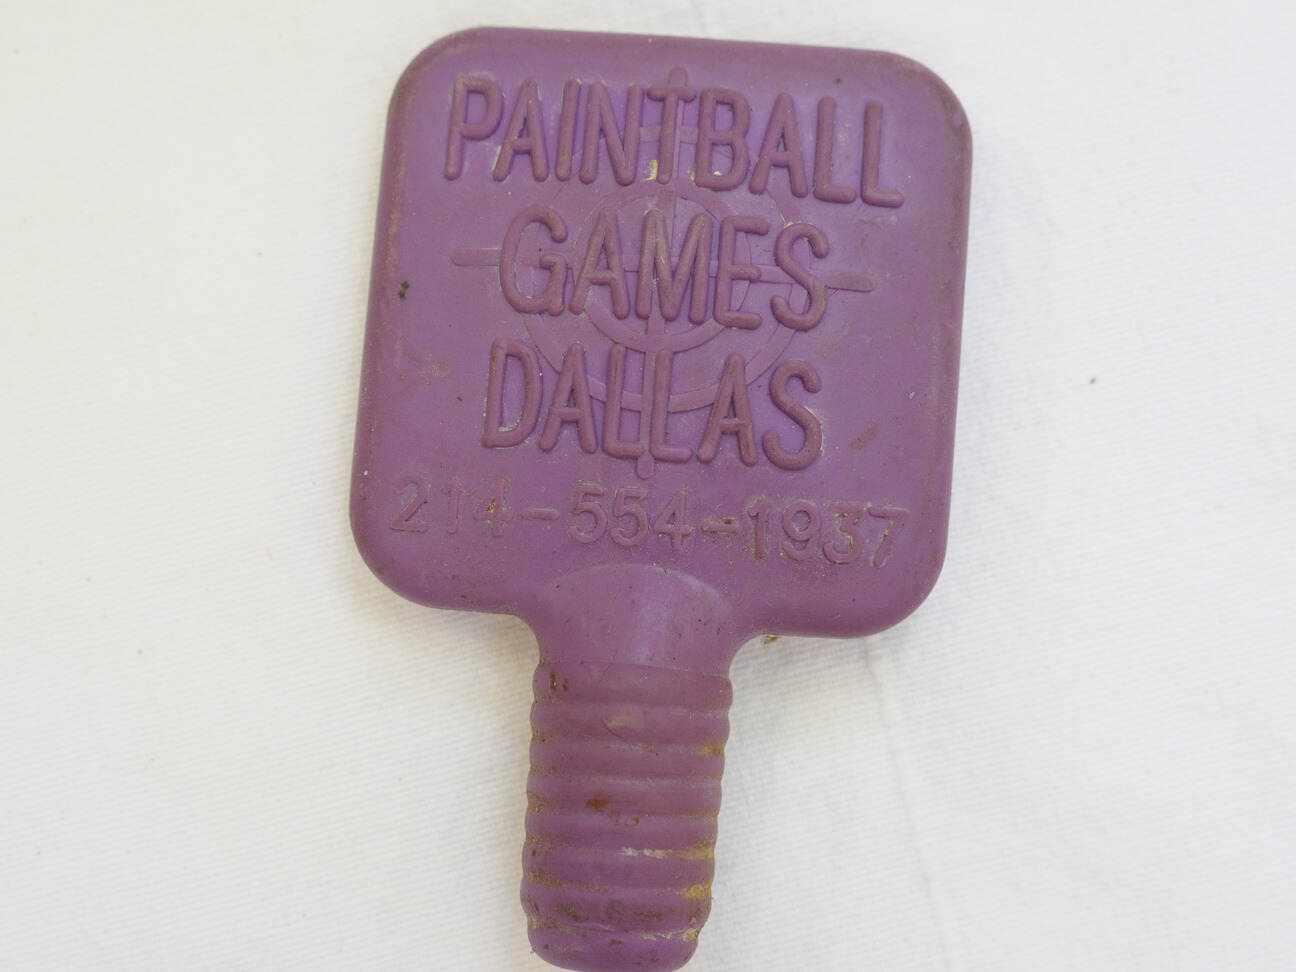 Paintball Games Dallas, viewloader barrel plug, used